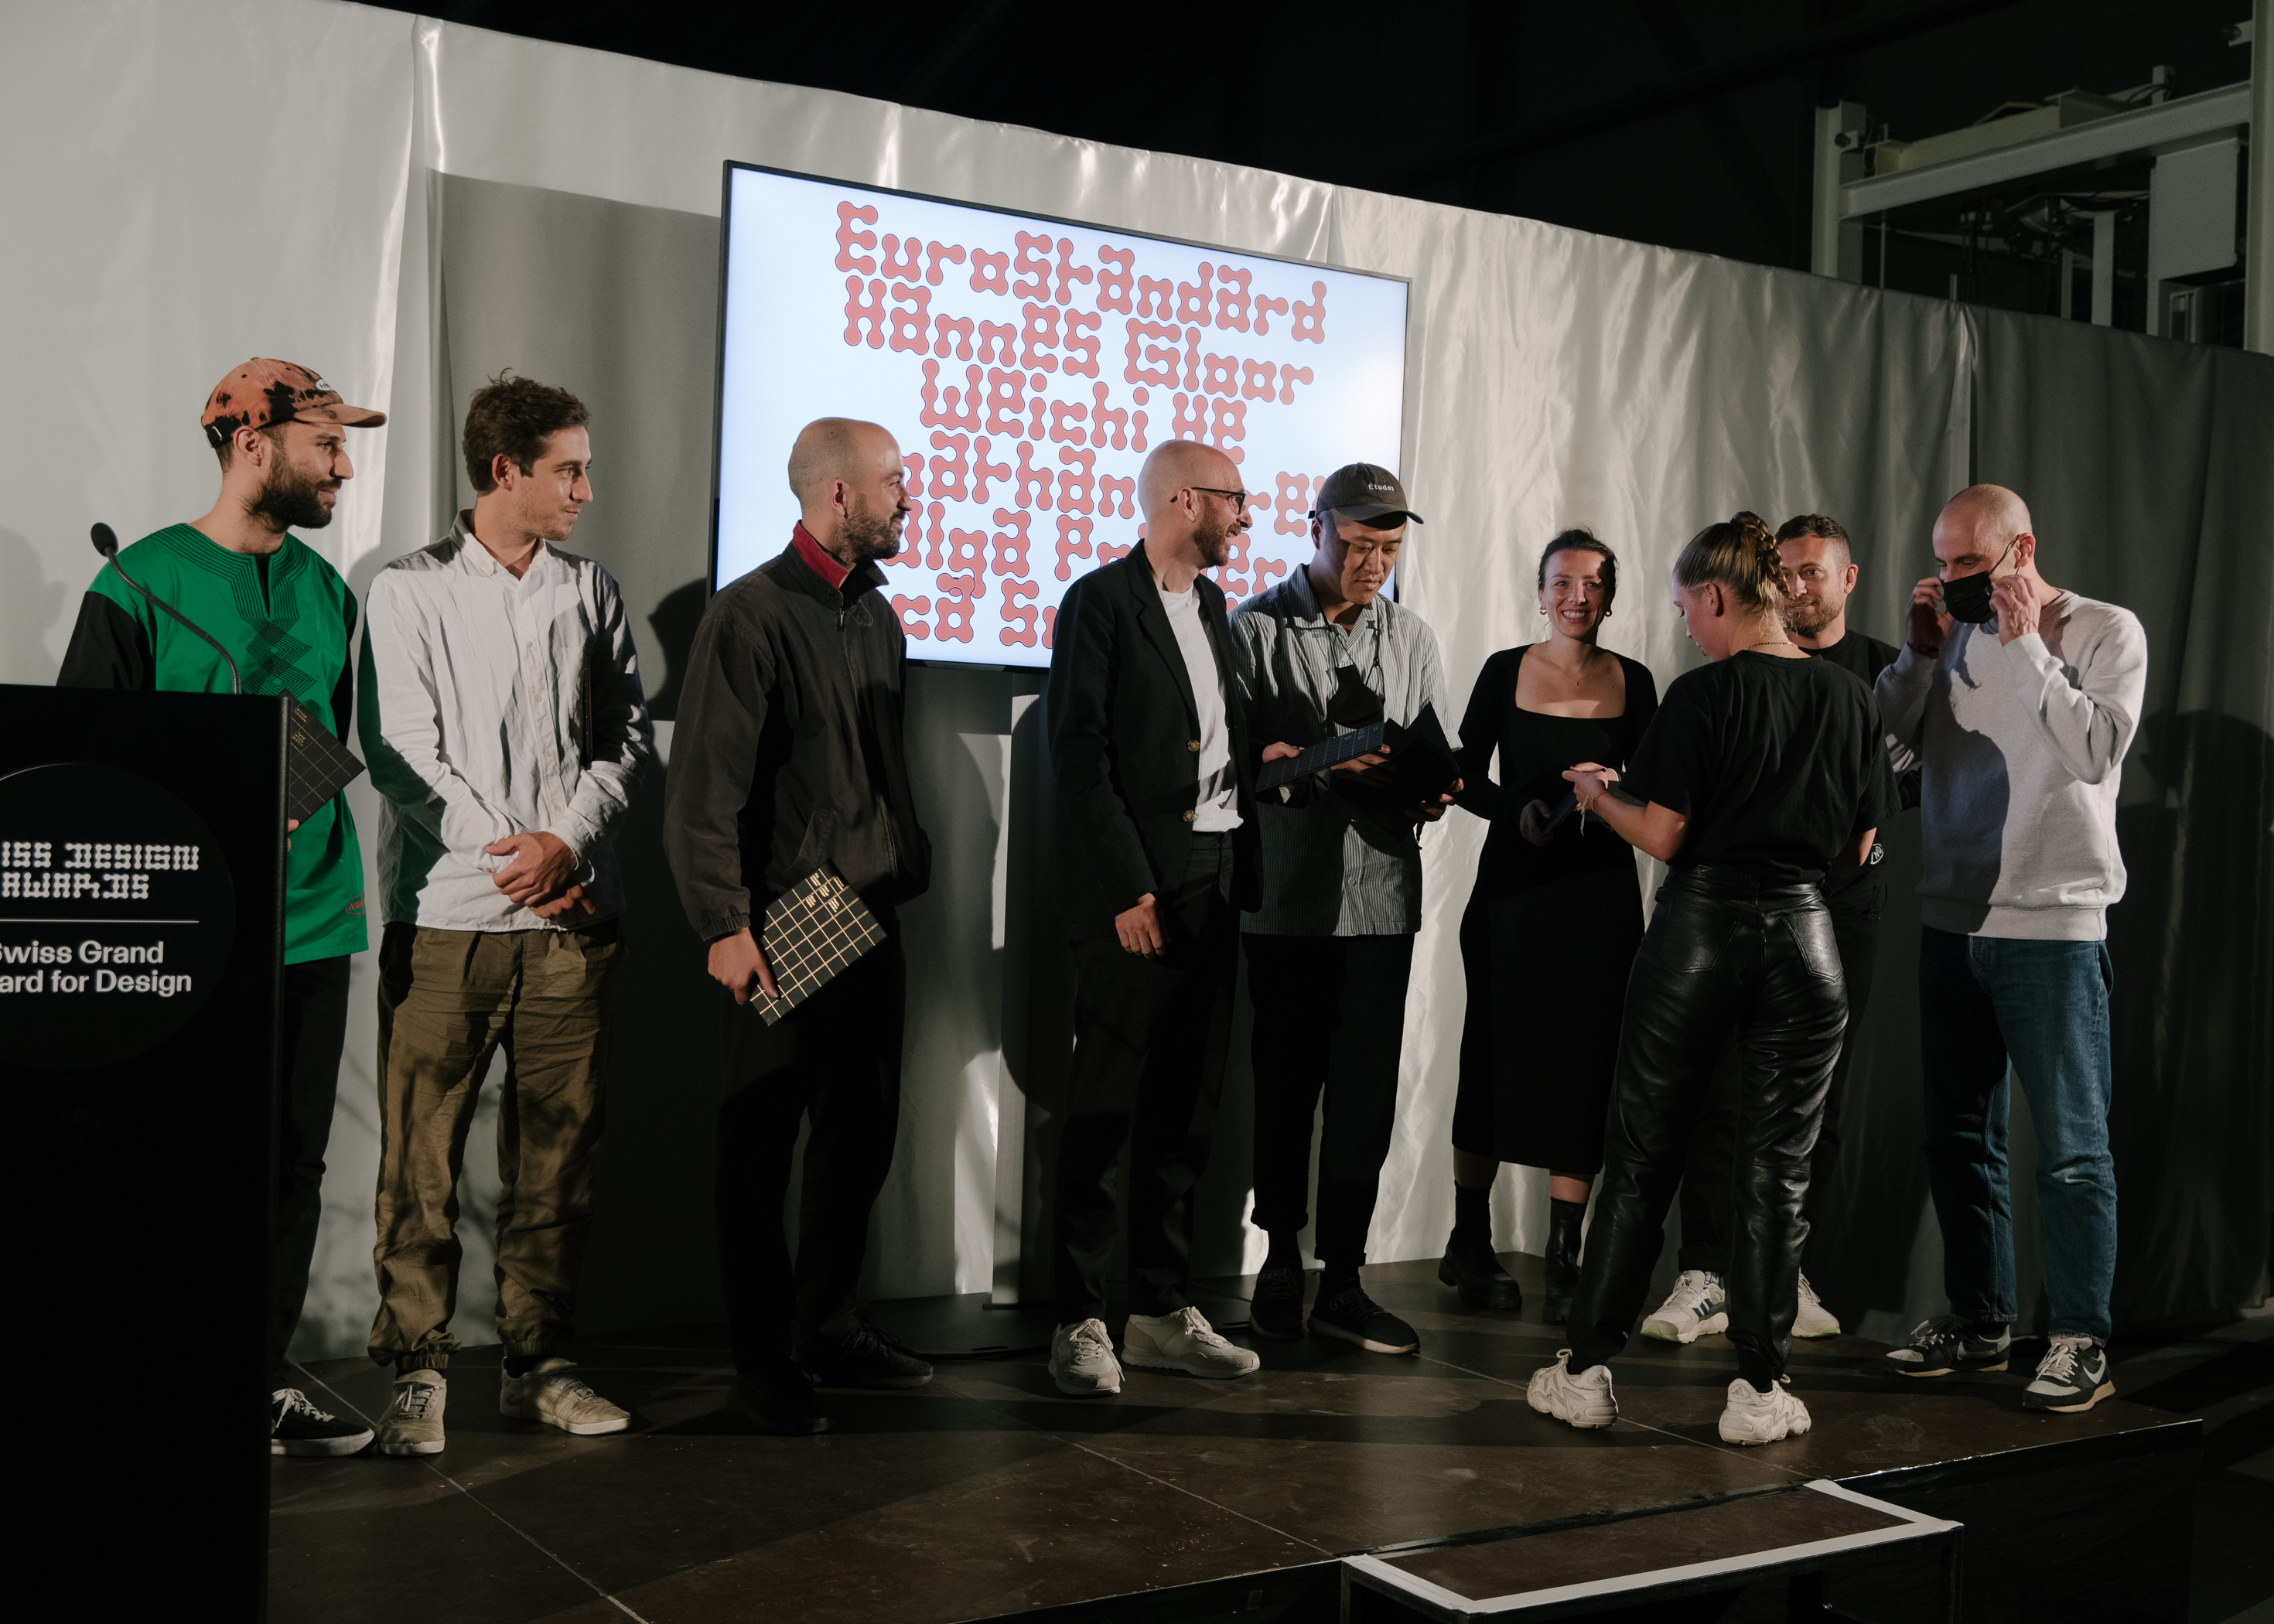 Swiss Design Awards ceremony. Ali-Eddine Abdelkhalek, Pierrick Brégeon, Clément Rouzaud, Jonathan Hares, Weichi He, Olga Prader, Luca Schenardi, Hannes Gloor